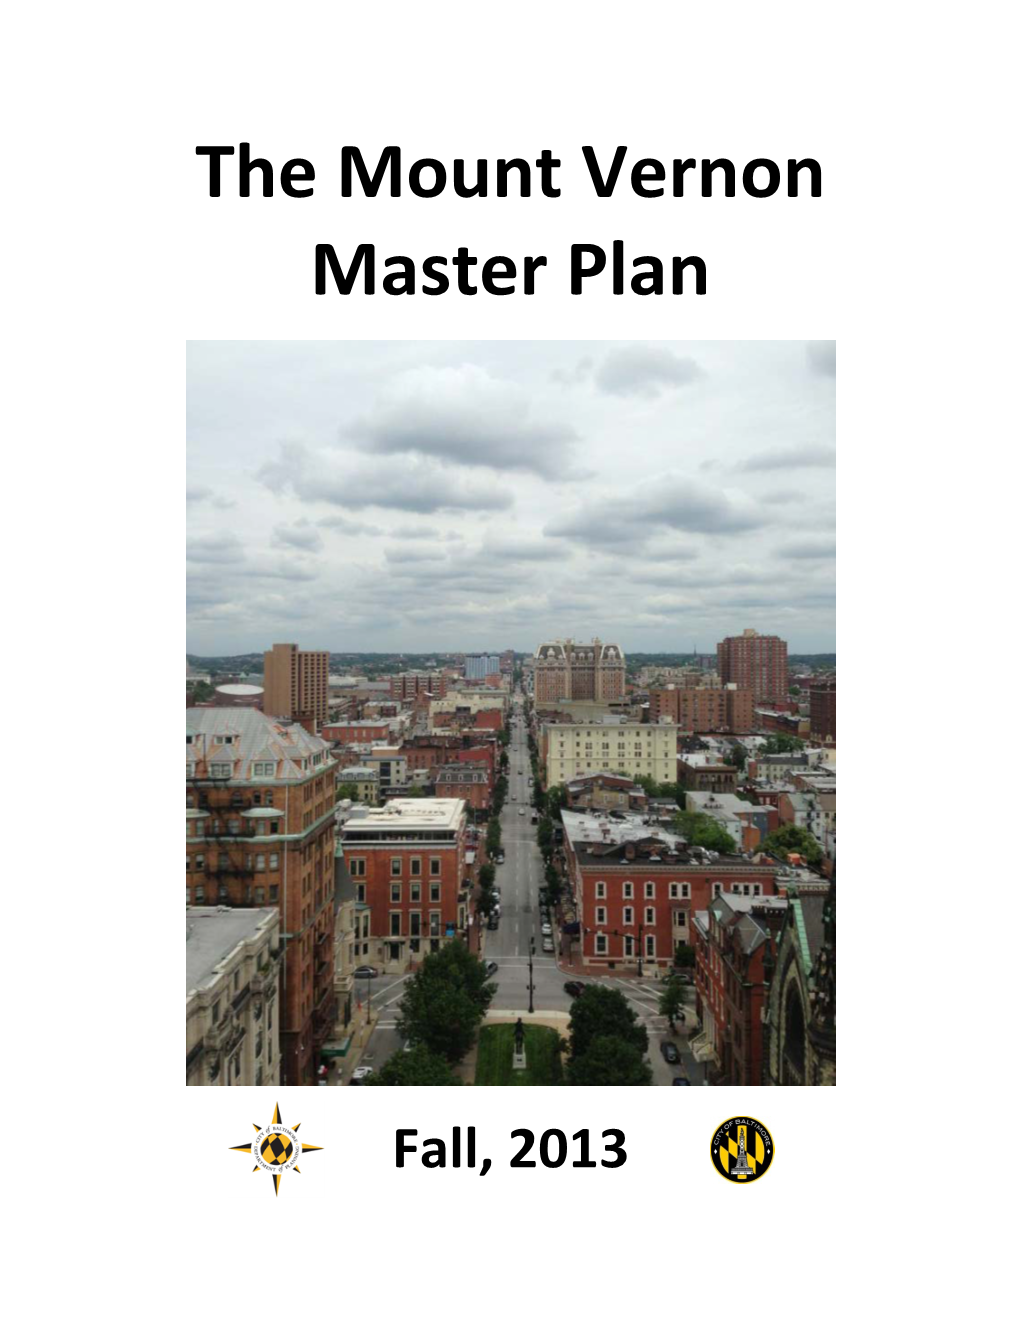 The Mount Vernon Master Plan